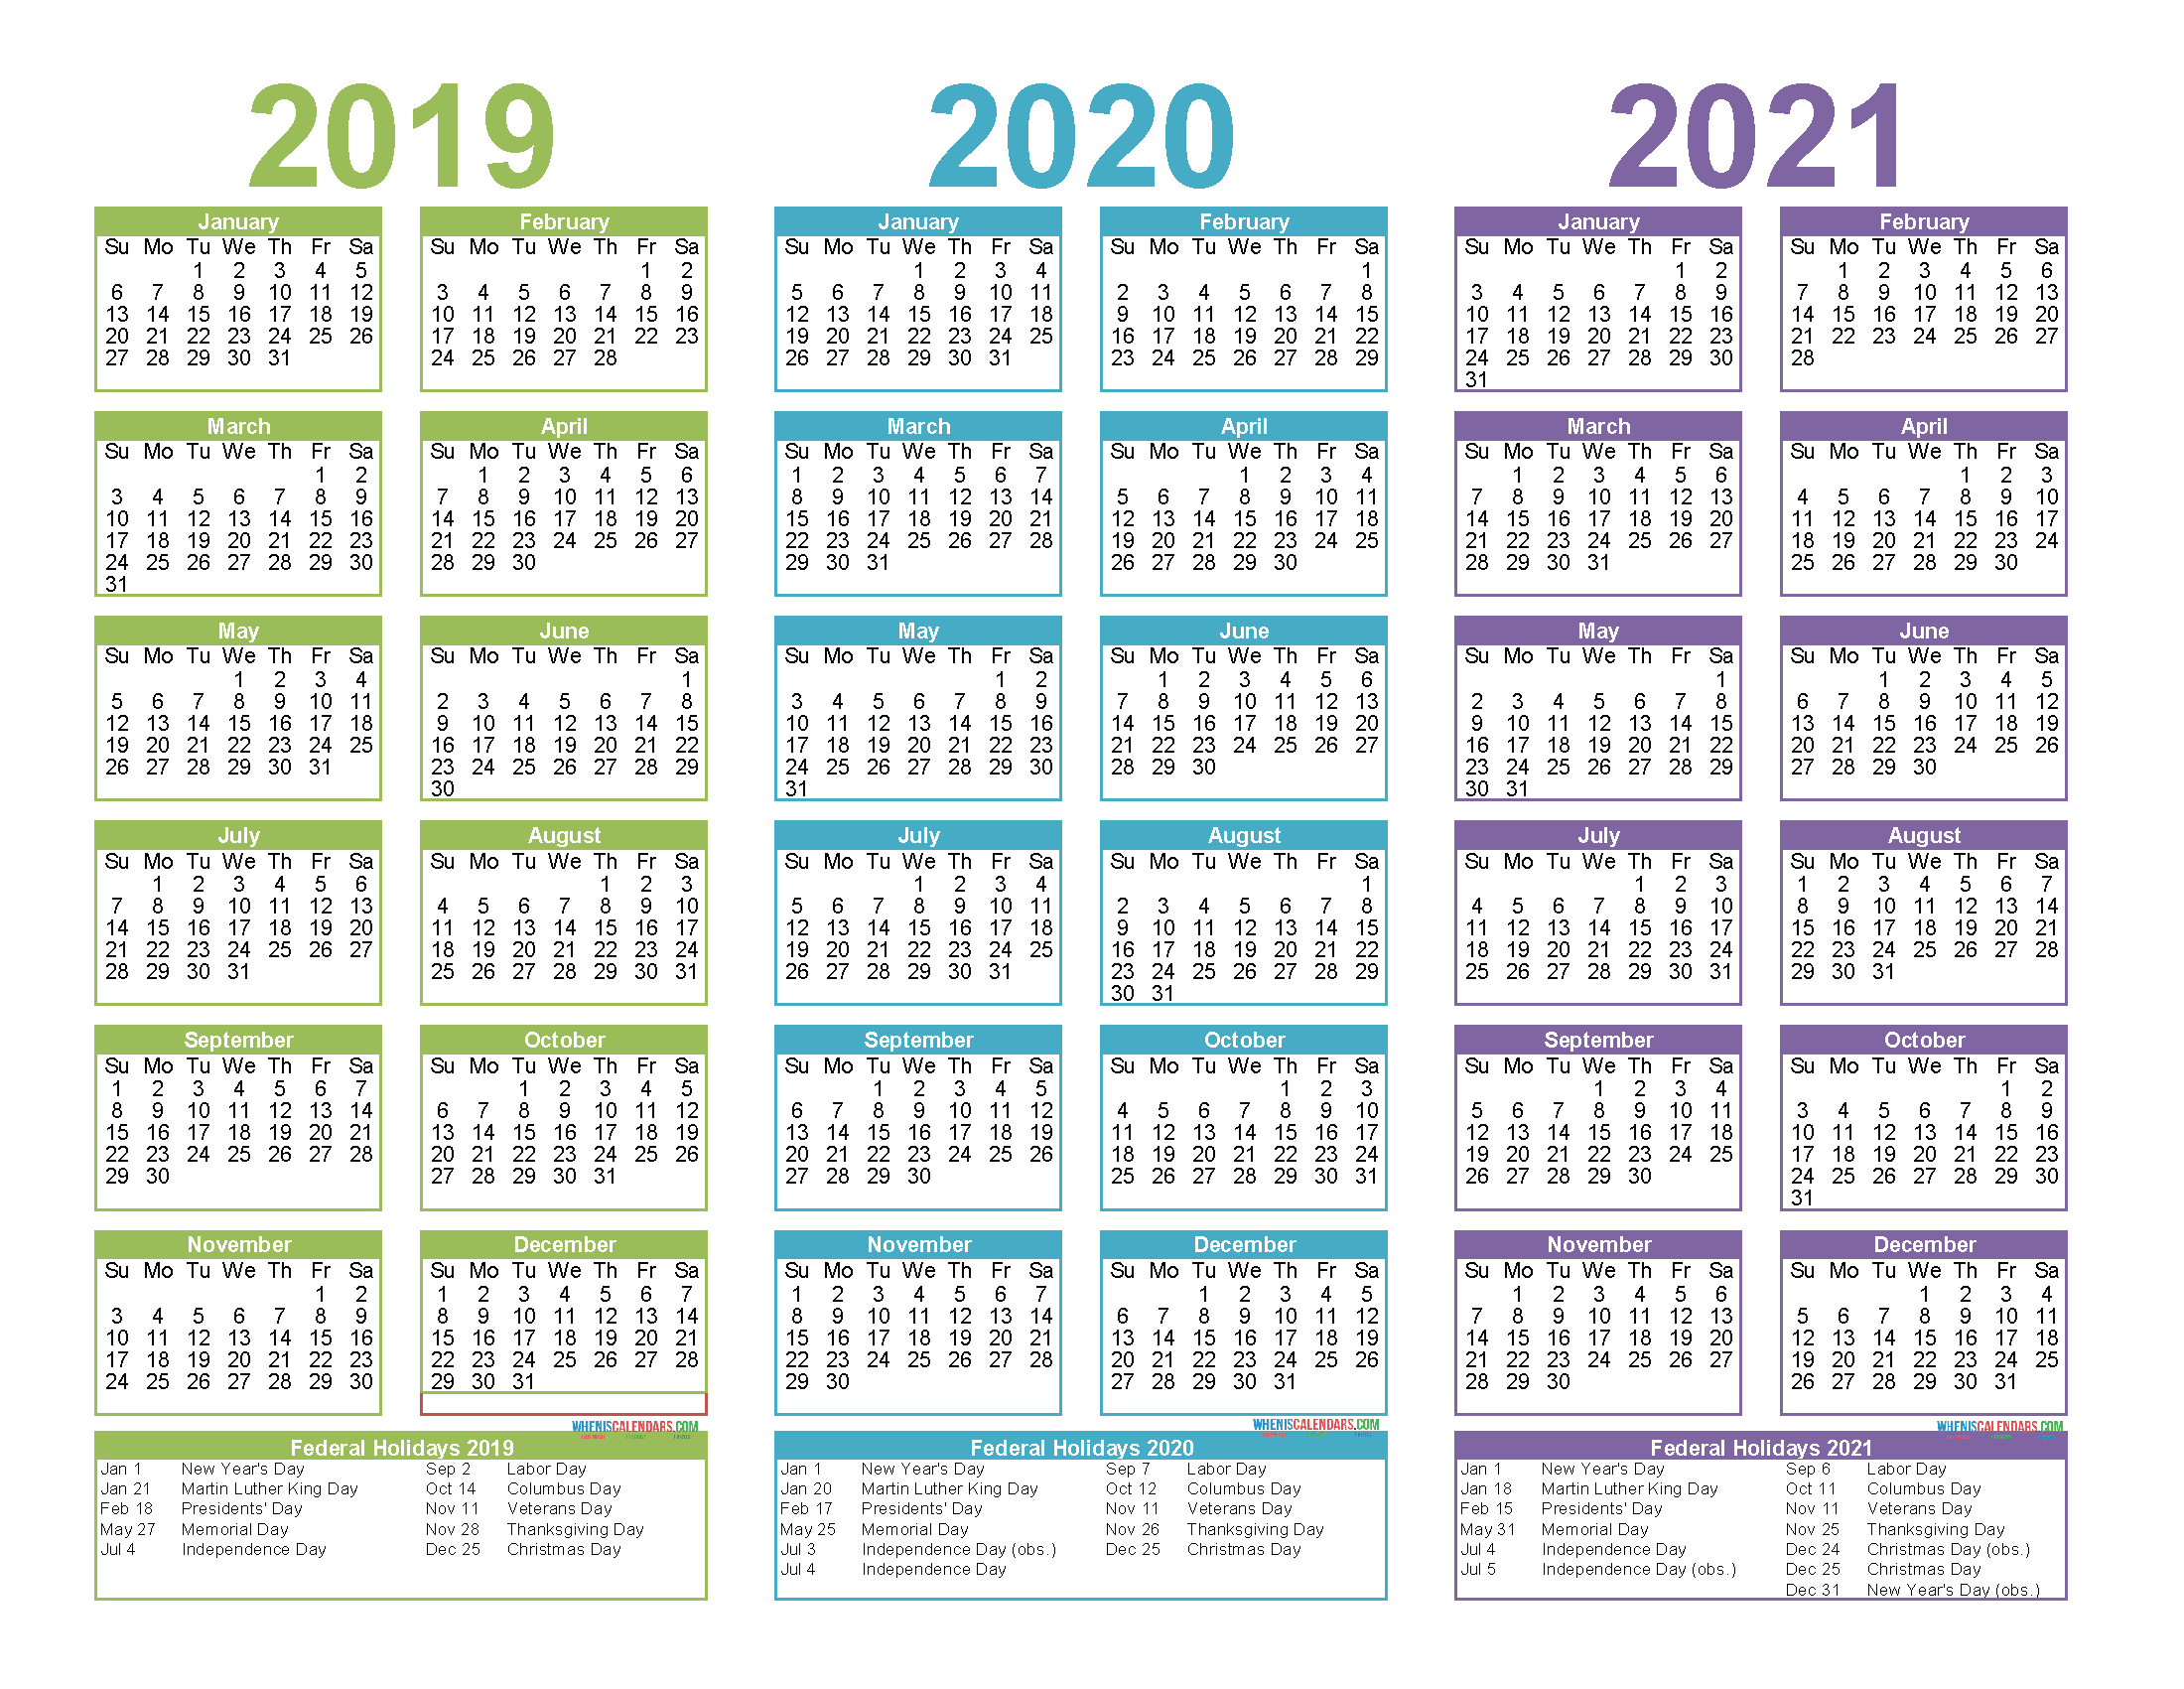 2019 To 2021 3 Year Calendar Printable Free Pdf, Word, Image